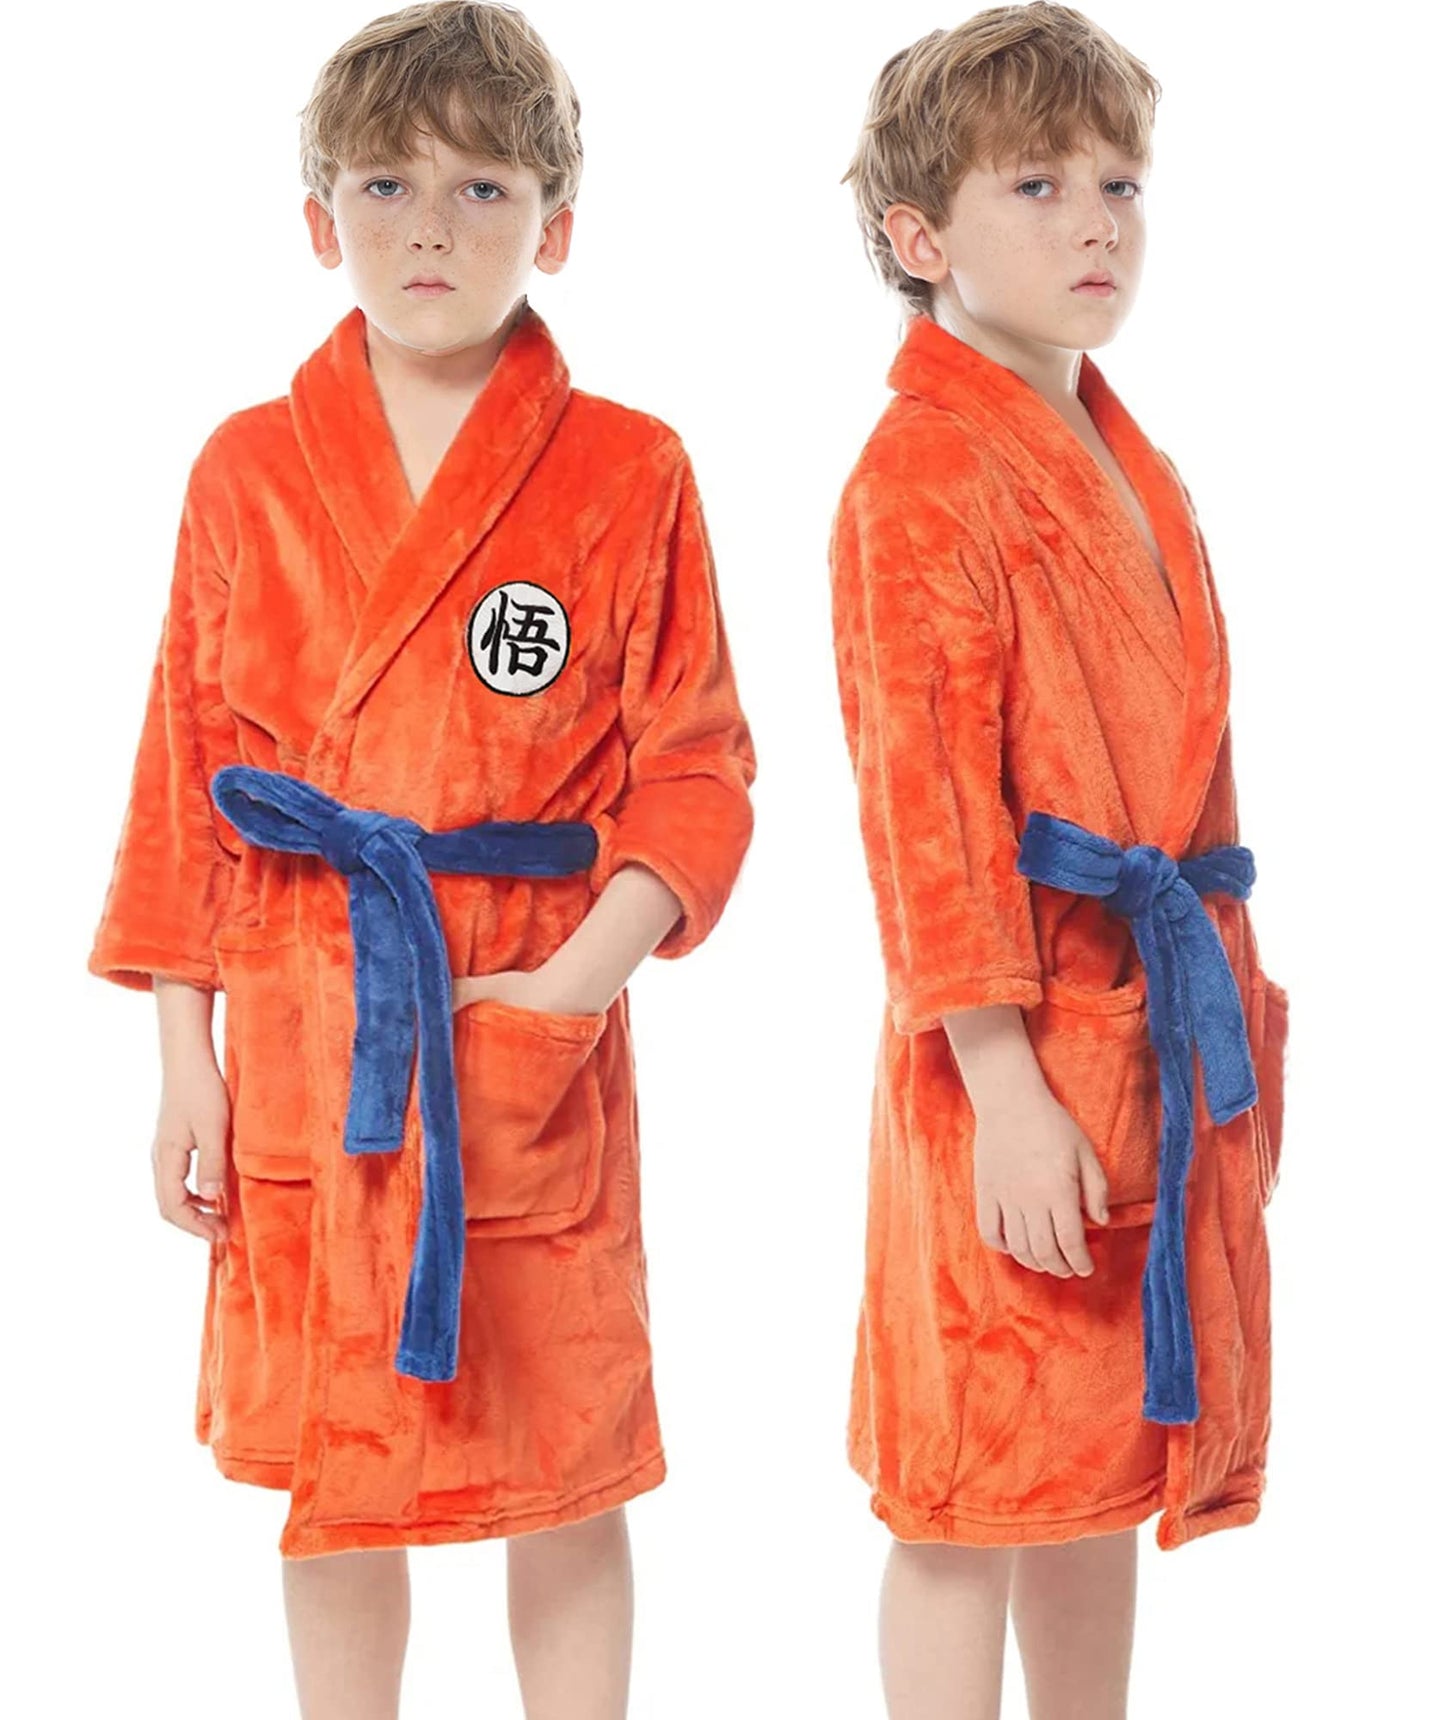 Heionia Anime Bathrobe Dragon Anime Pajamas Robes for Boys Bathrobes Costume for Kids Soft Plush Long Bath Robe Cosplay (S)